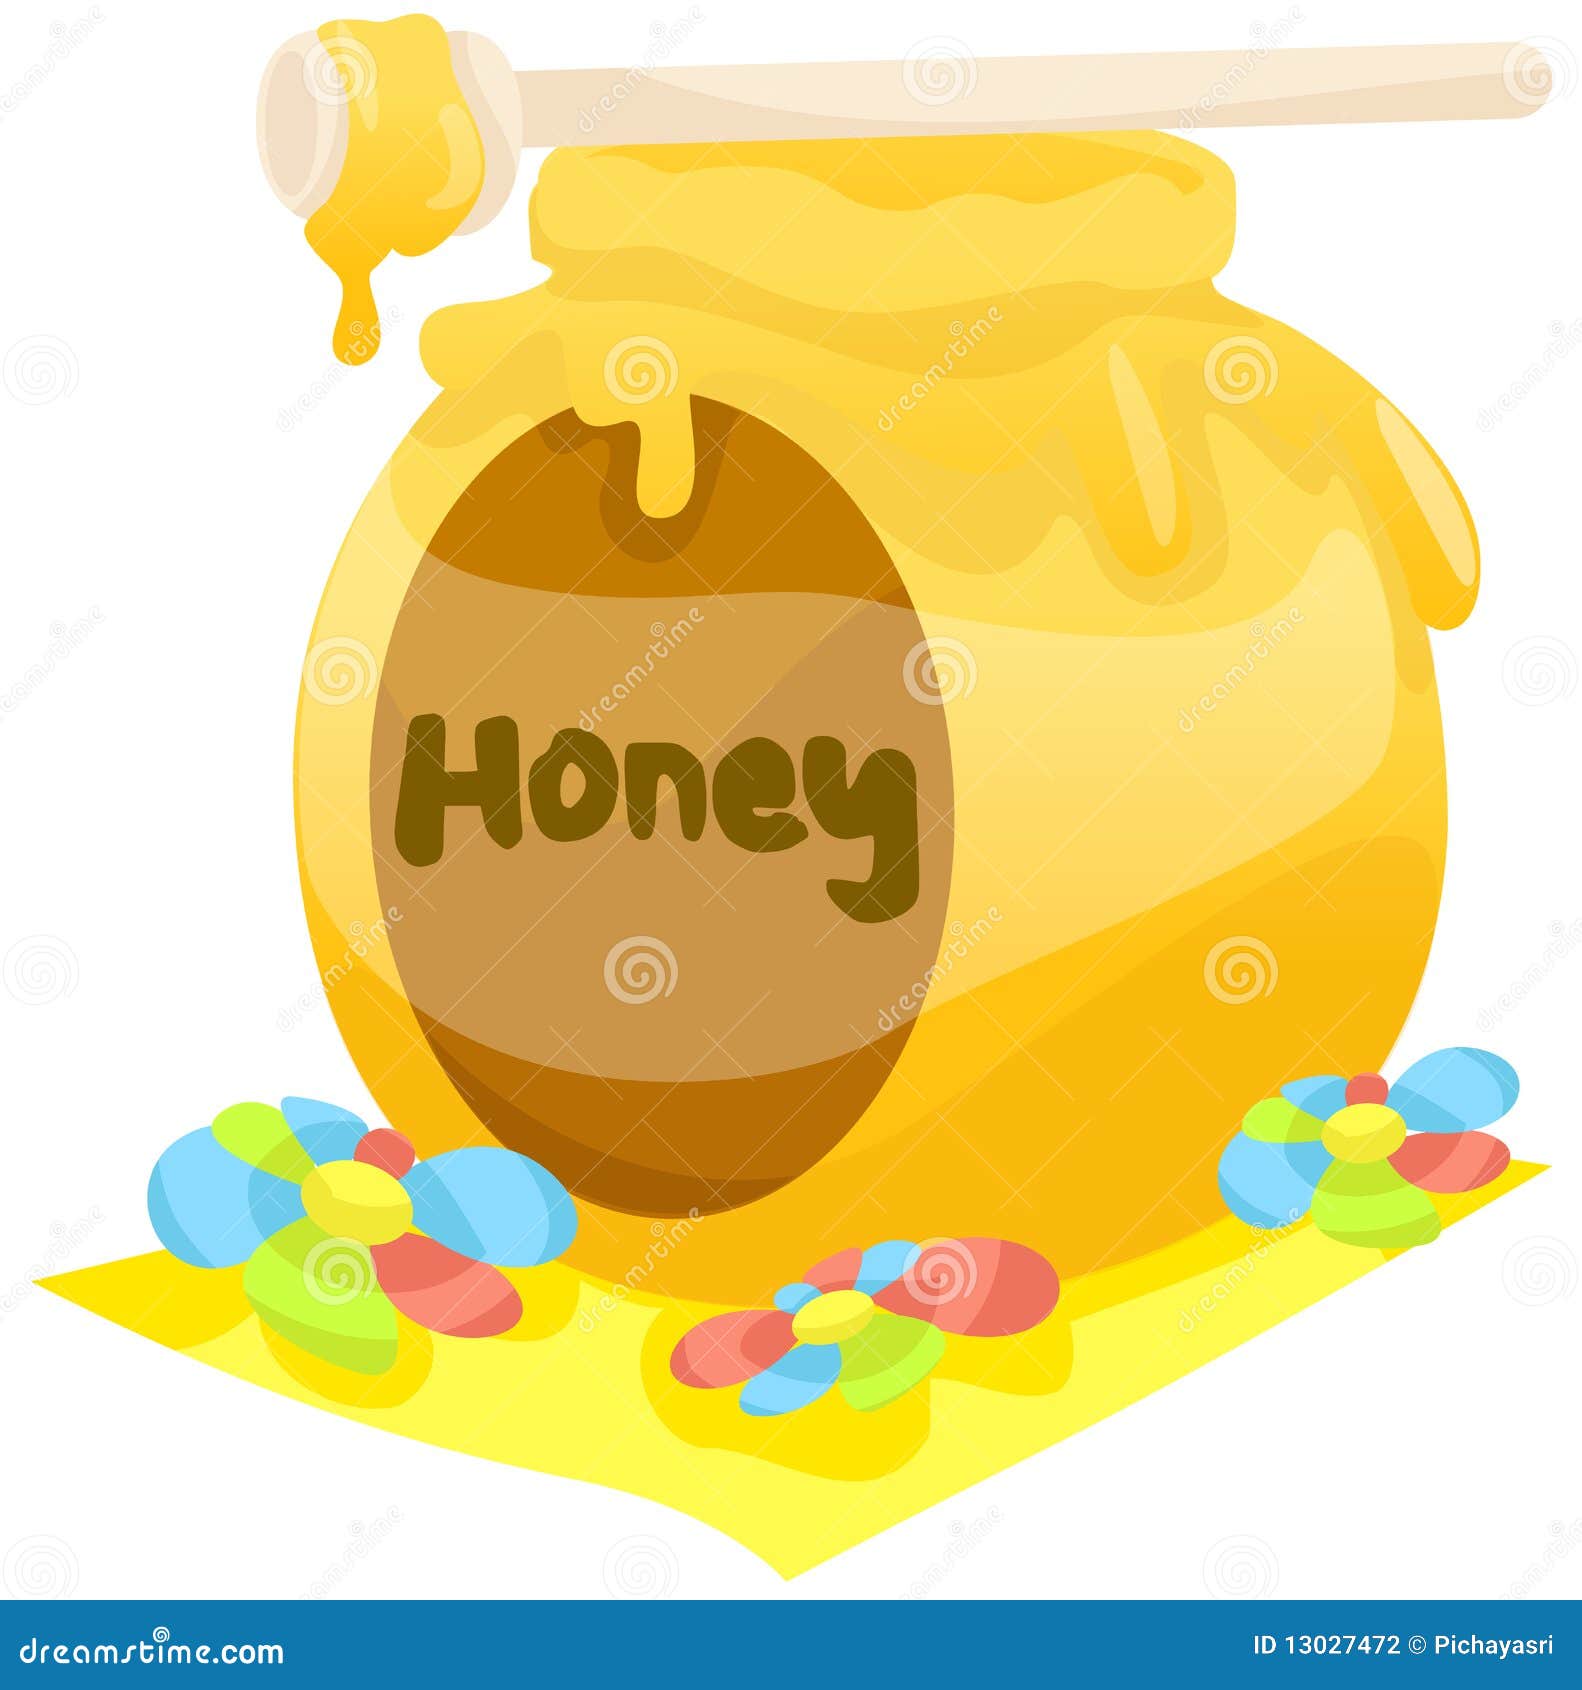 clipart of honey - photo #38